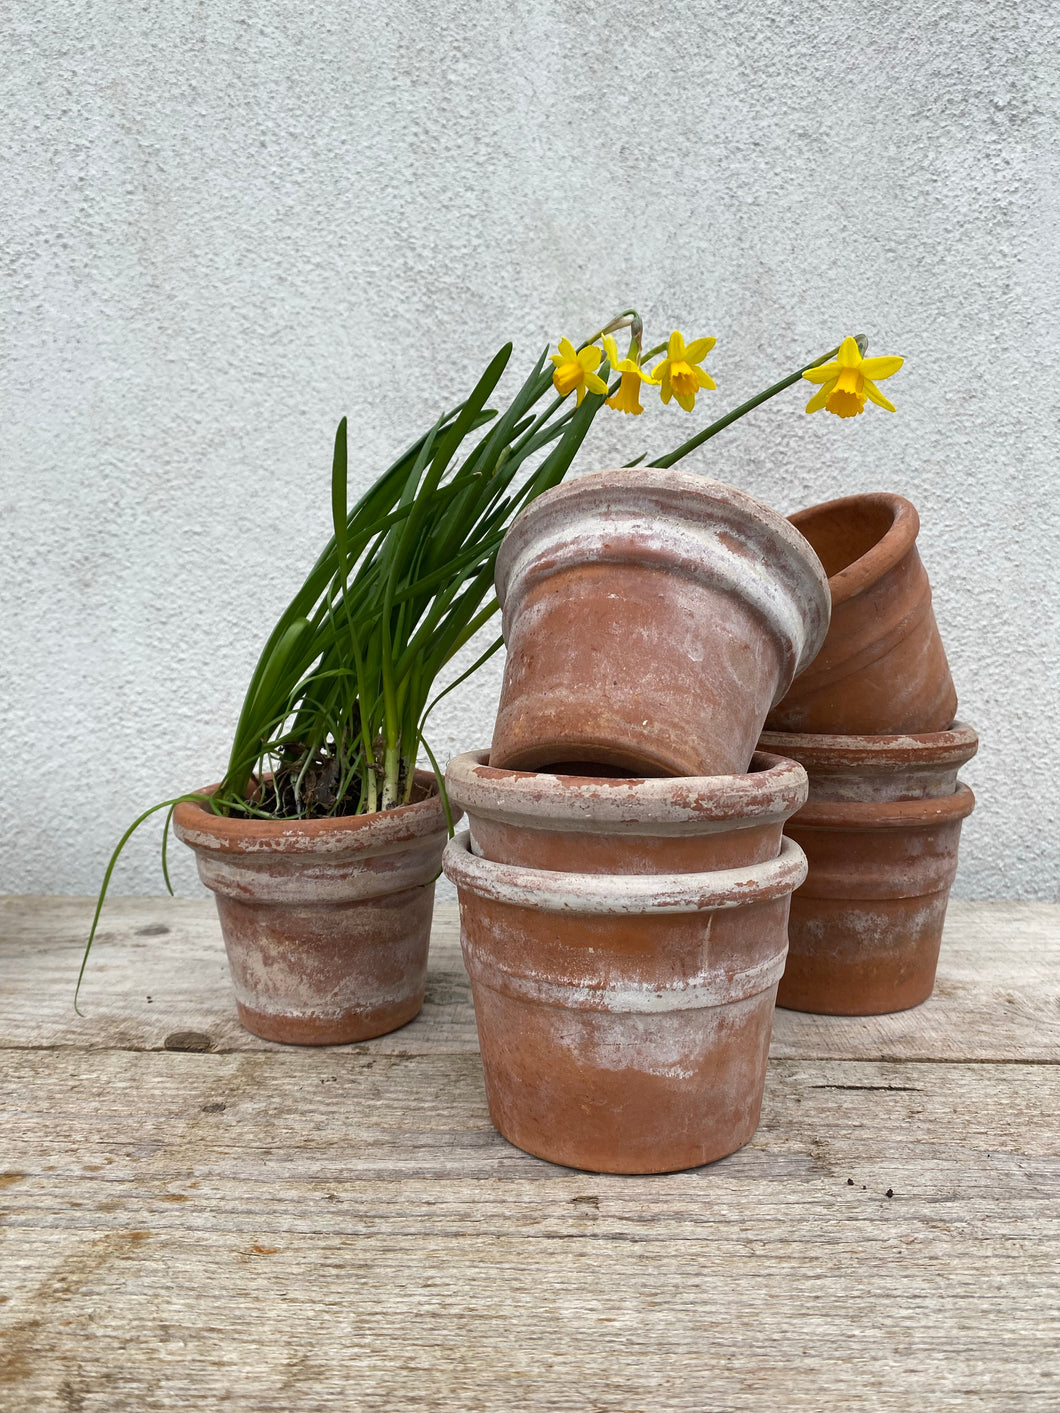 Vintage weathered terracotta pots